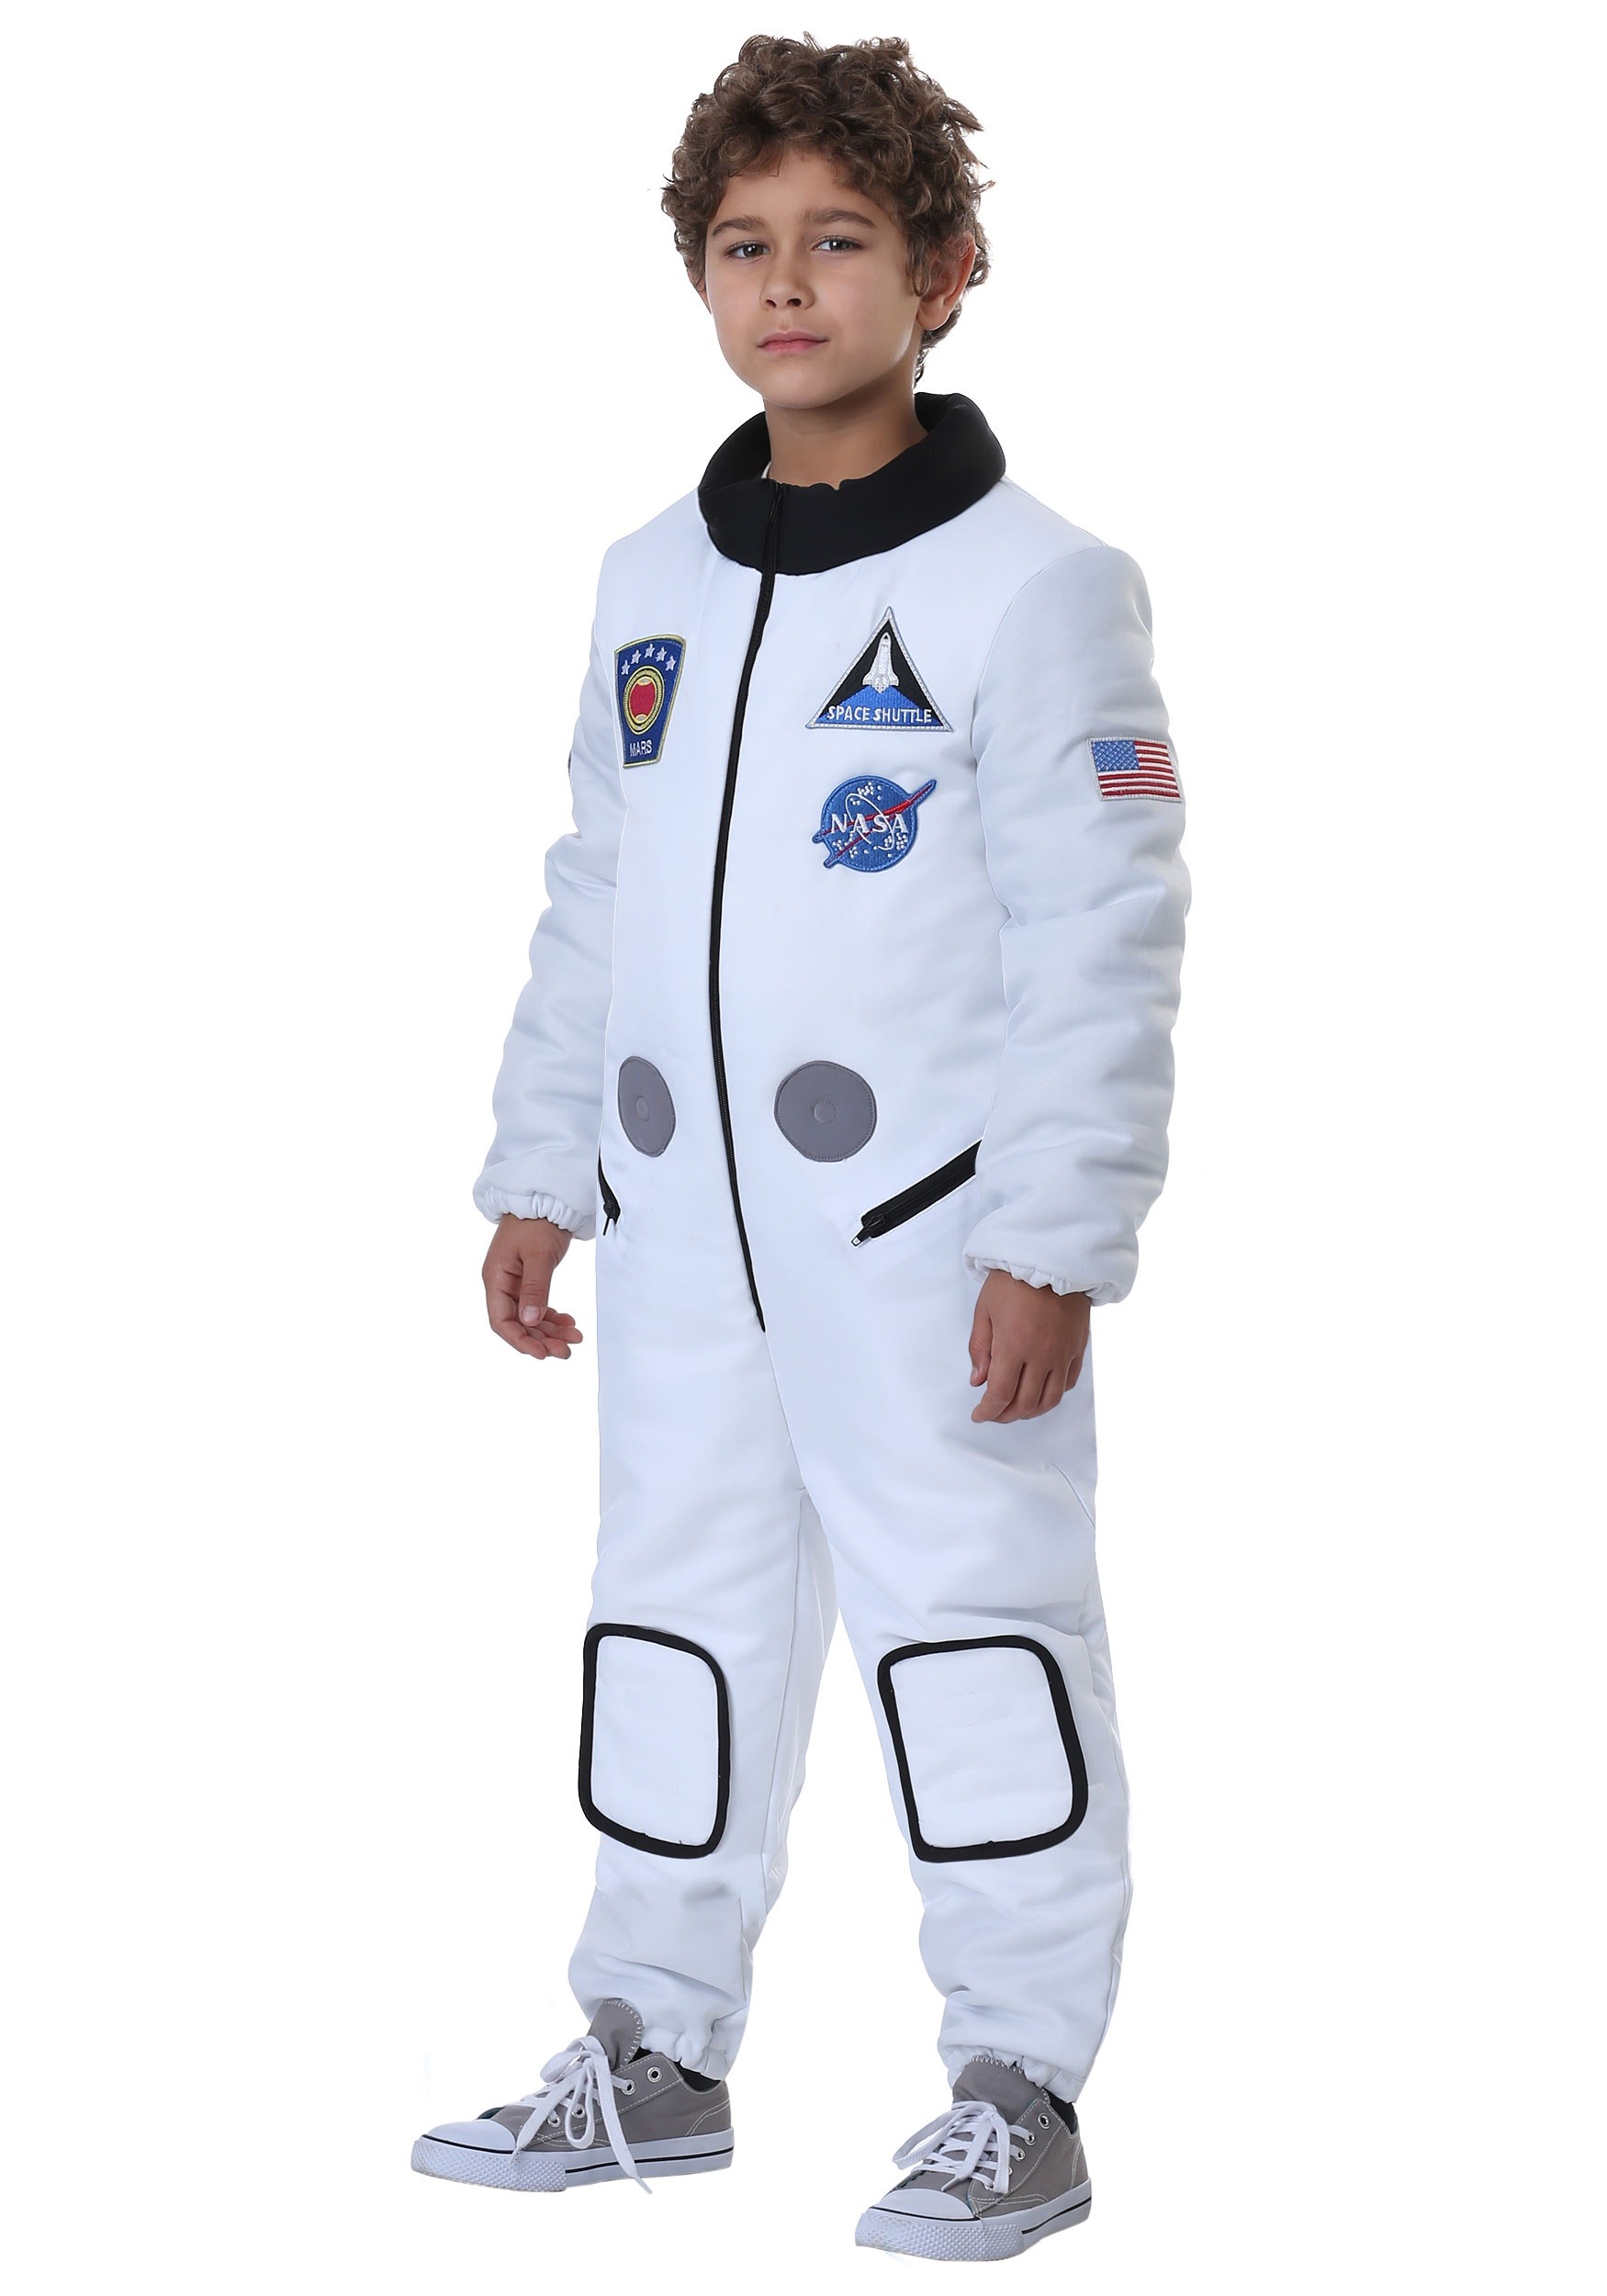 Deluxe Astronaut Costume For Kid's